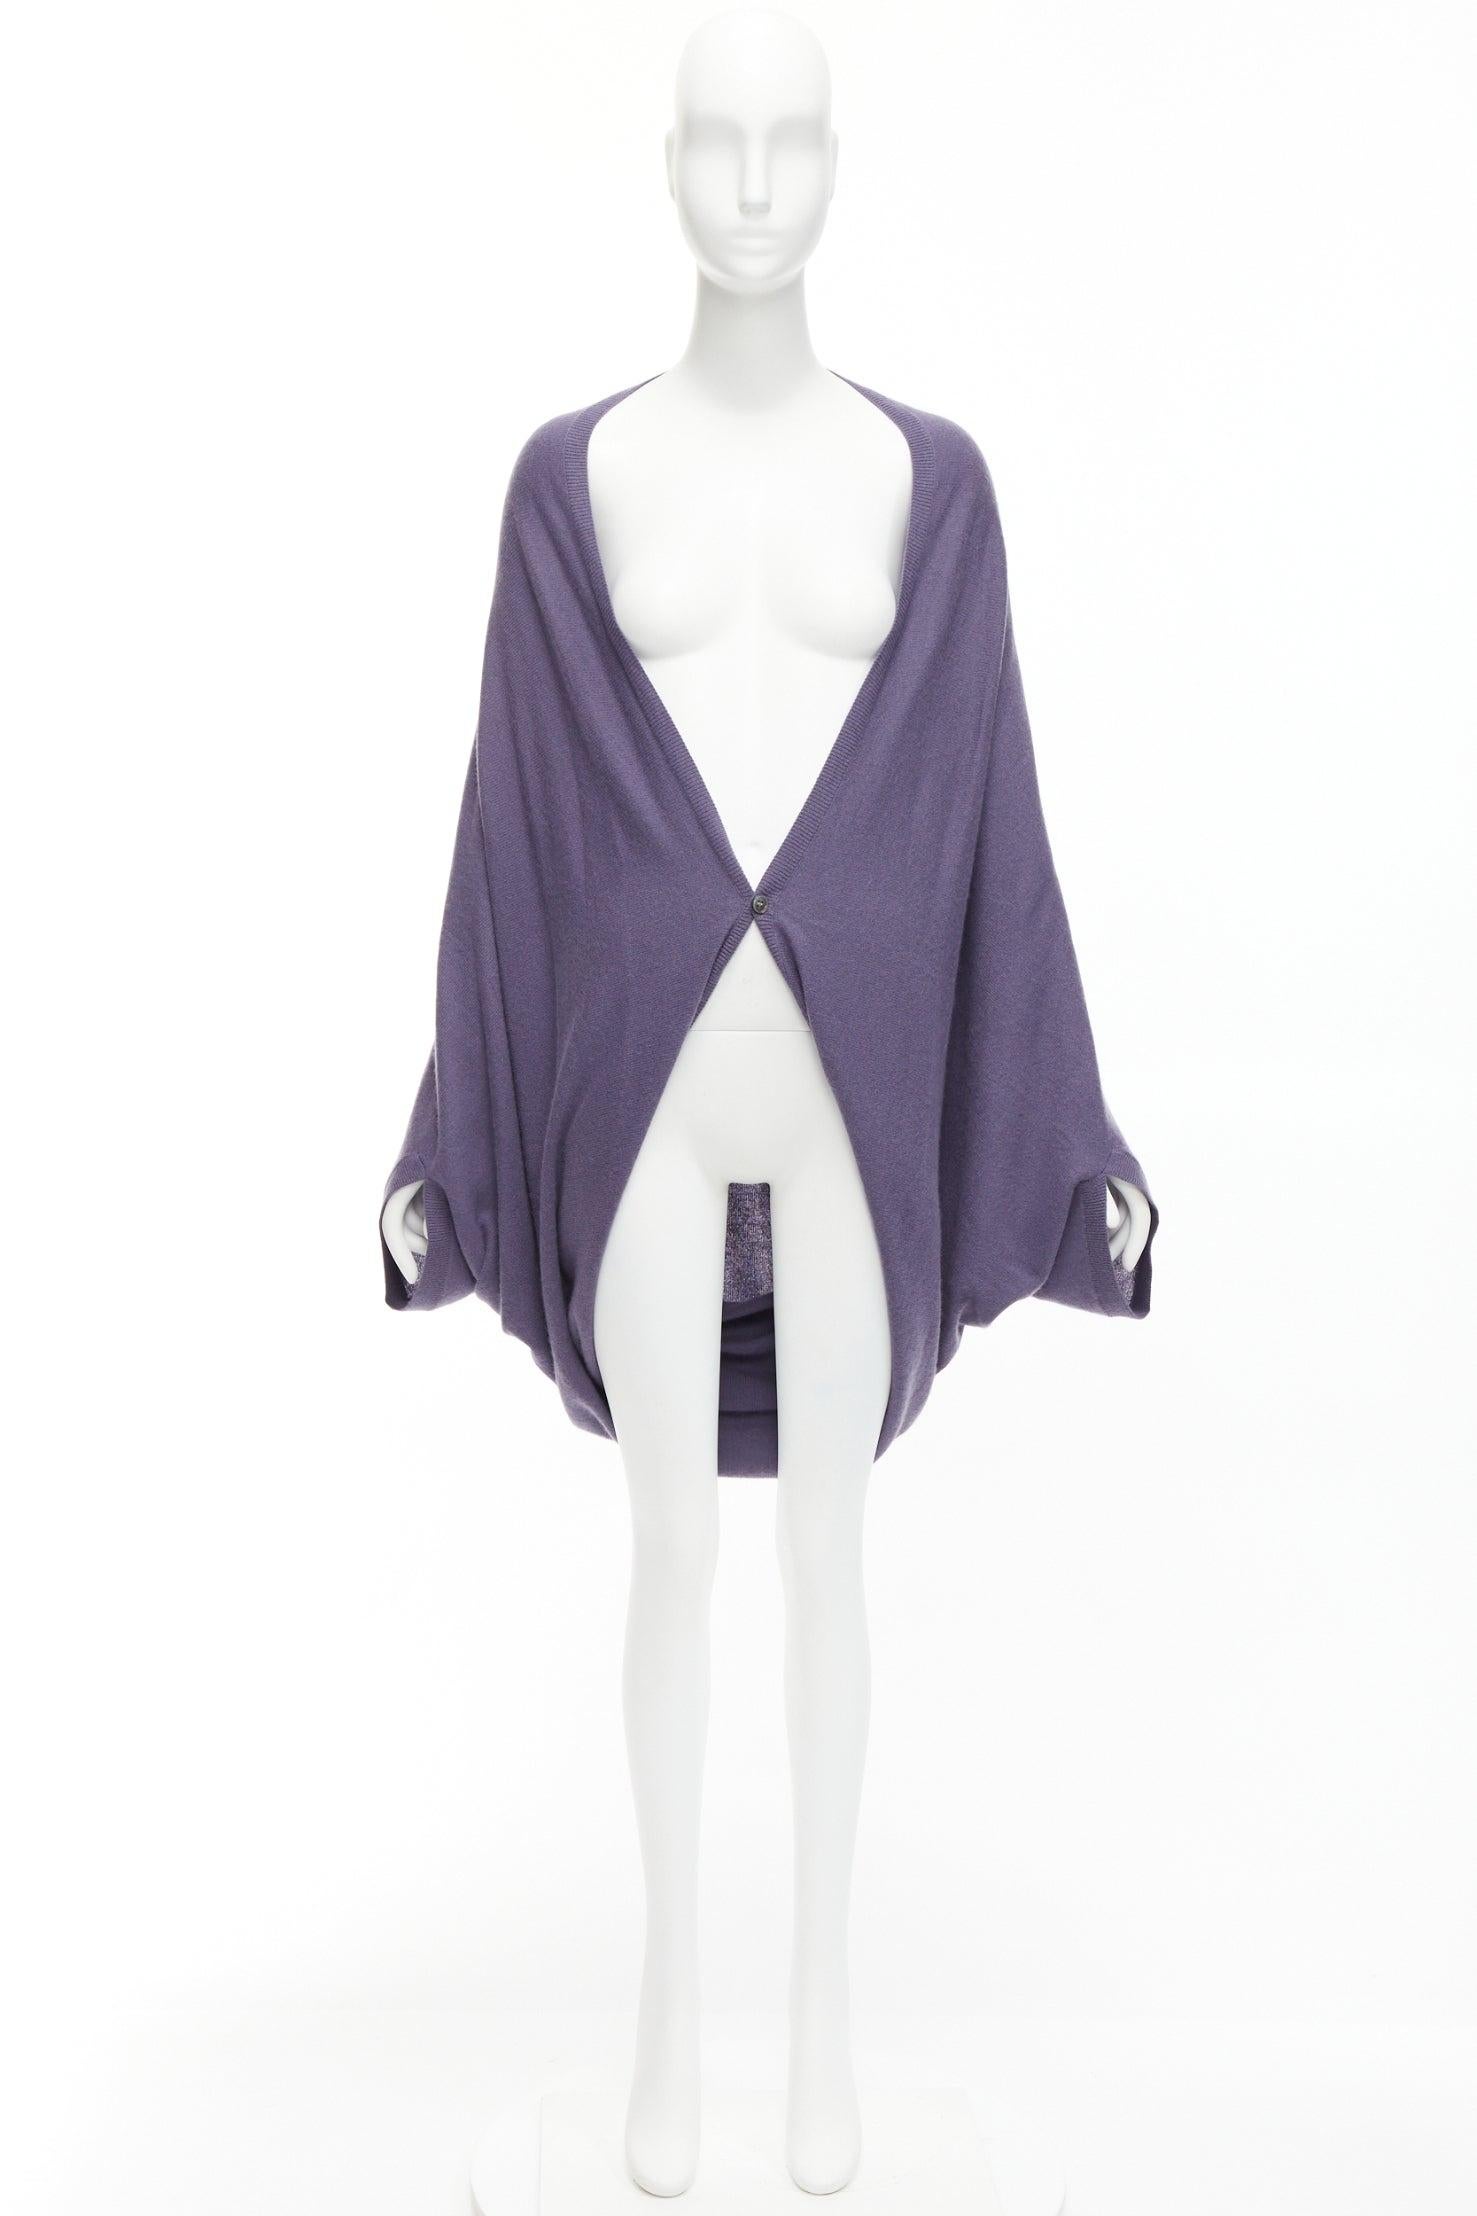 TSE 100% pure cashmere purple low cut batwing shawl cardigan For Sale 5